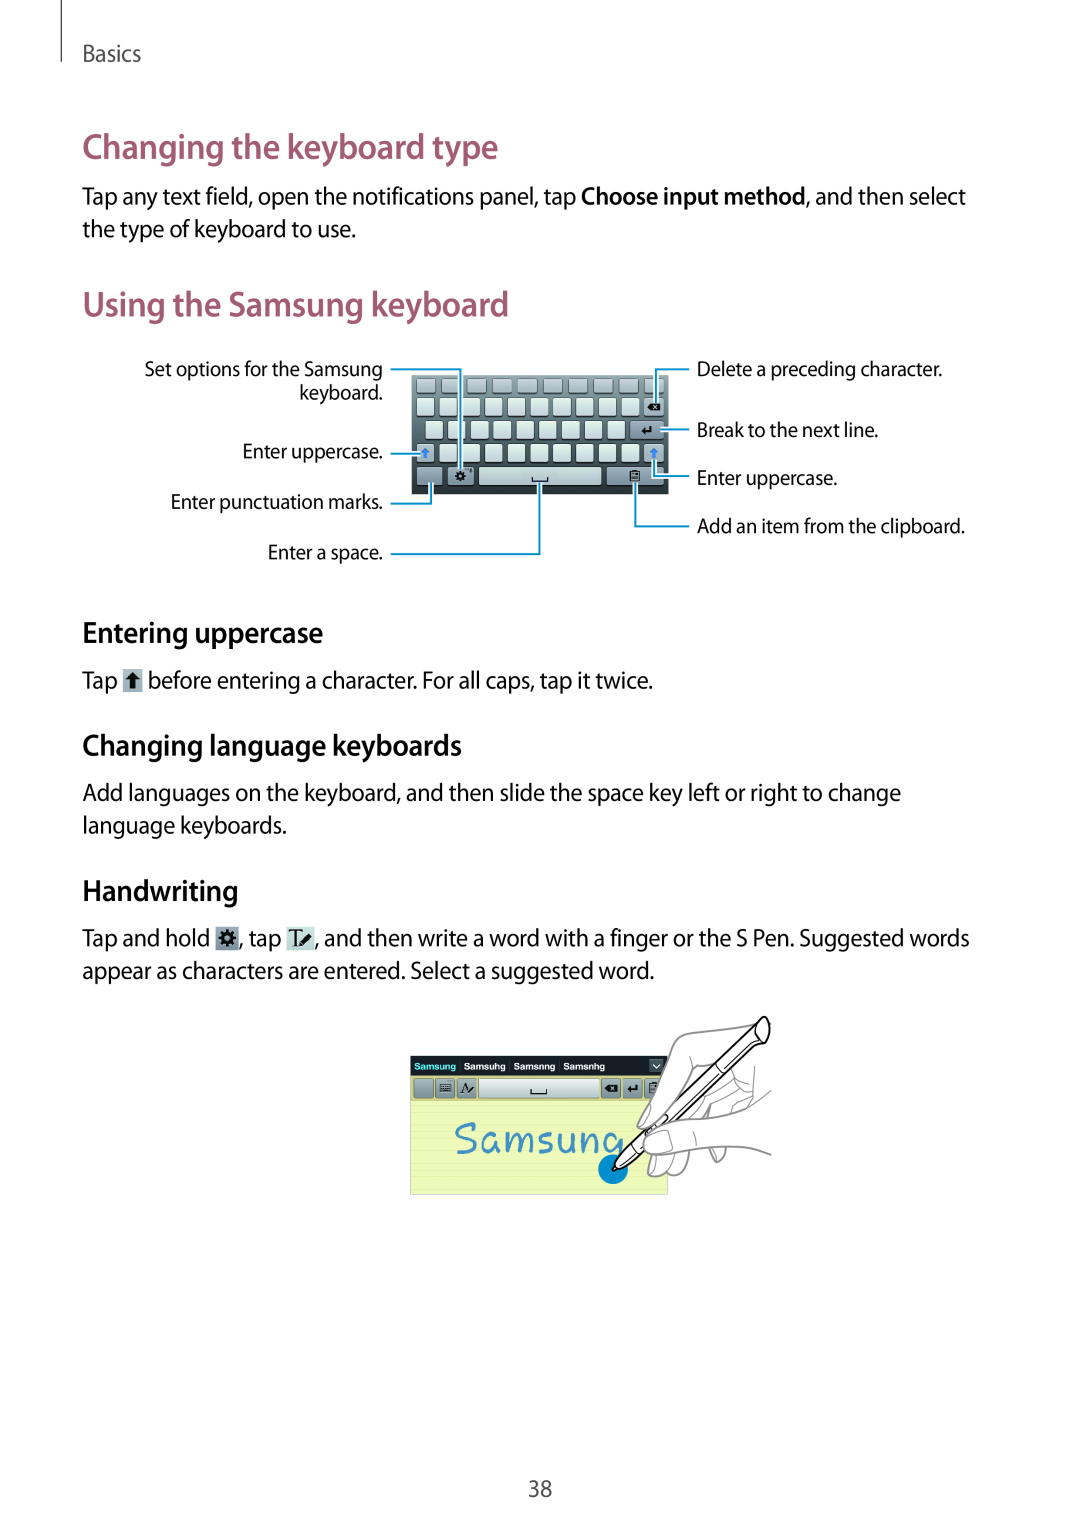 Samsung GT-N5100 Changing the keyboard type, Using the Samsung keyboard, Entering uppercase, Changing language keyboards 